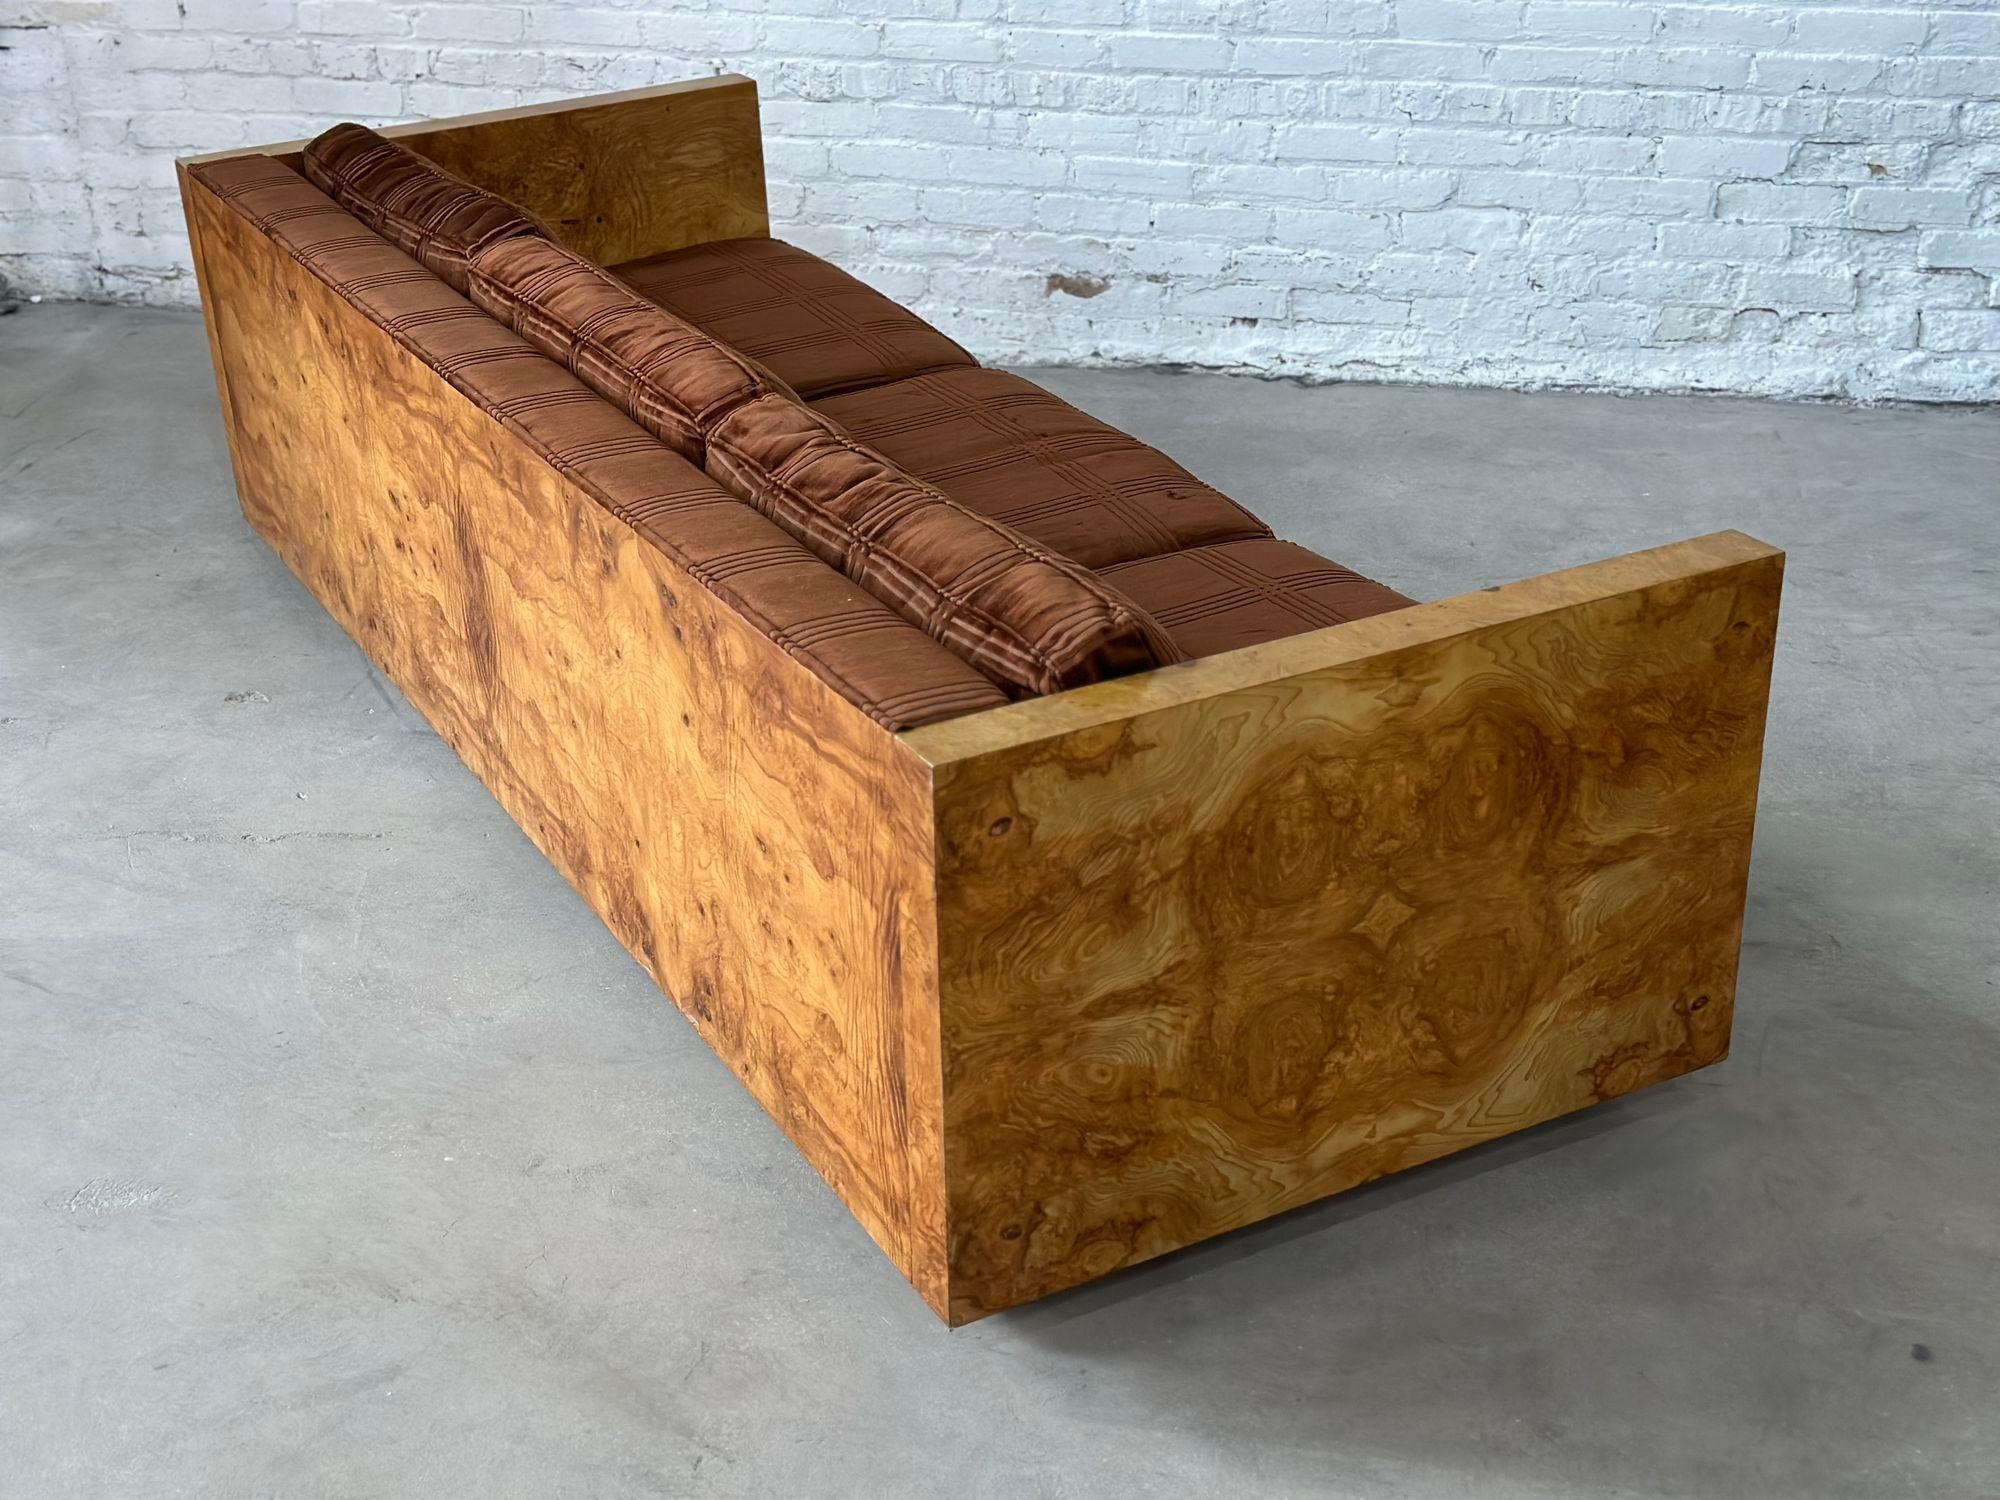 Milo Baughman Burl Wood Cased Sofa, 1970. Beautiful condition, original upholstery.

